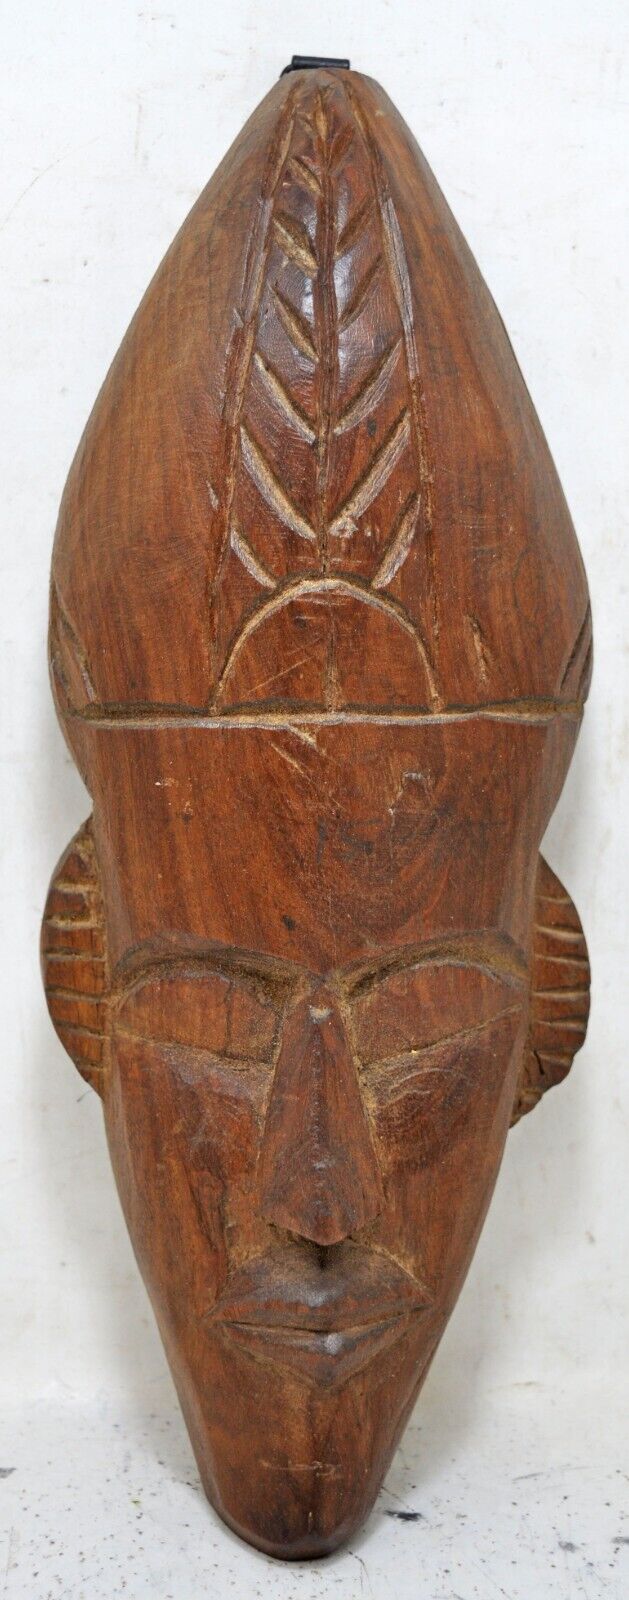 Vintage Wooden Wall Décor Tribal Mask Original Old Hand Carved